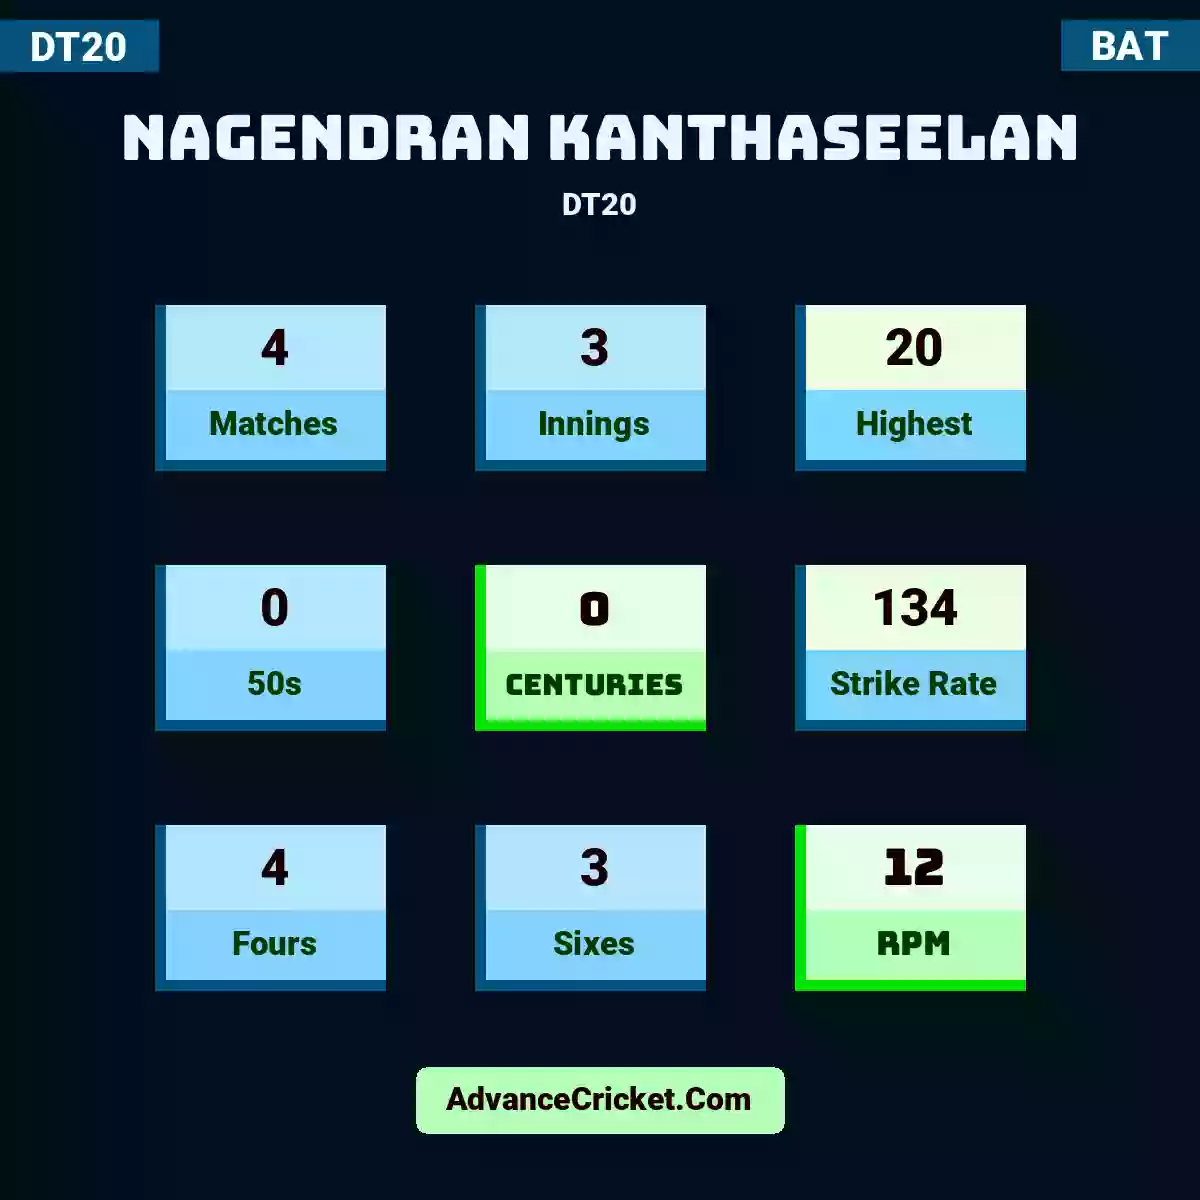 Nagendran Kanthaseelan DT20 , Nagendran Kanthaseelan played 4 matches, scored 20 runs as highest, 0 half-centuries, and 0 centuries, with a strike rate of 134. N.Kanthaseelan hit 4 fours and 3 sixes, with an RPM of 12.